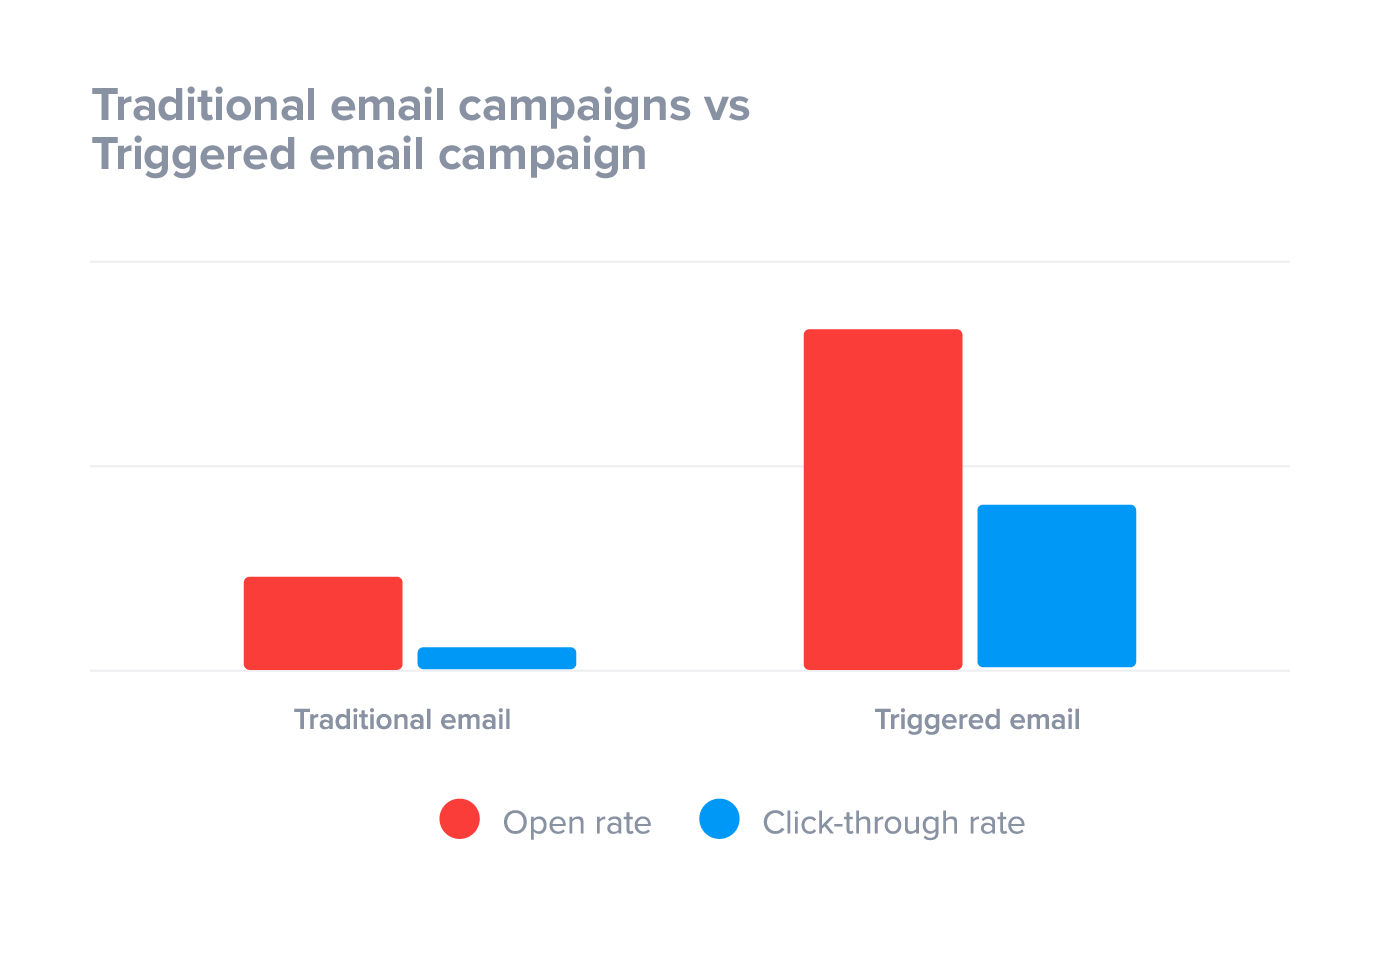 Aktivierte E-Mail-Kampagnen übertreffen traditionelle E-Mail-Kampagnen